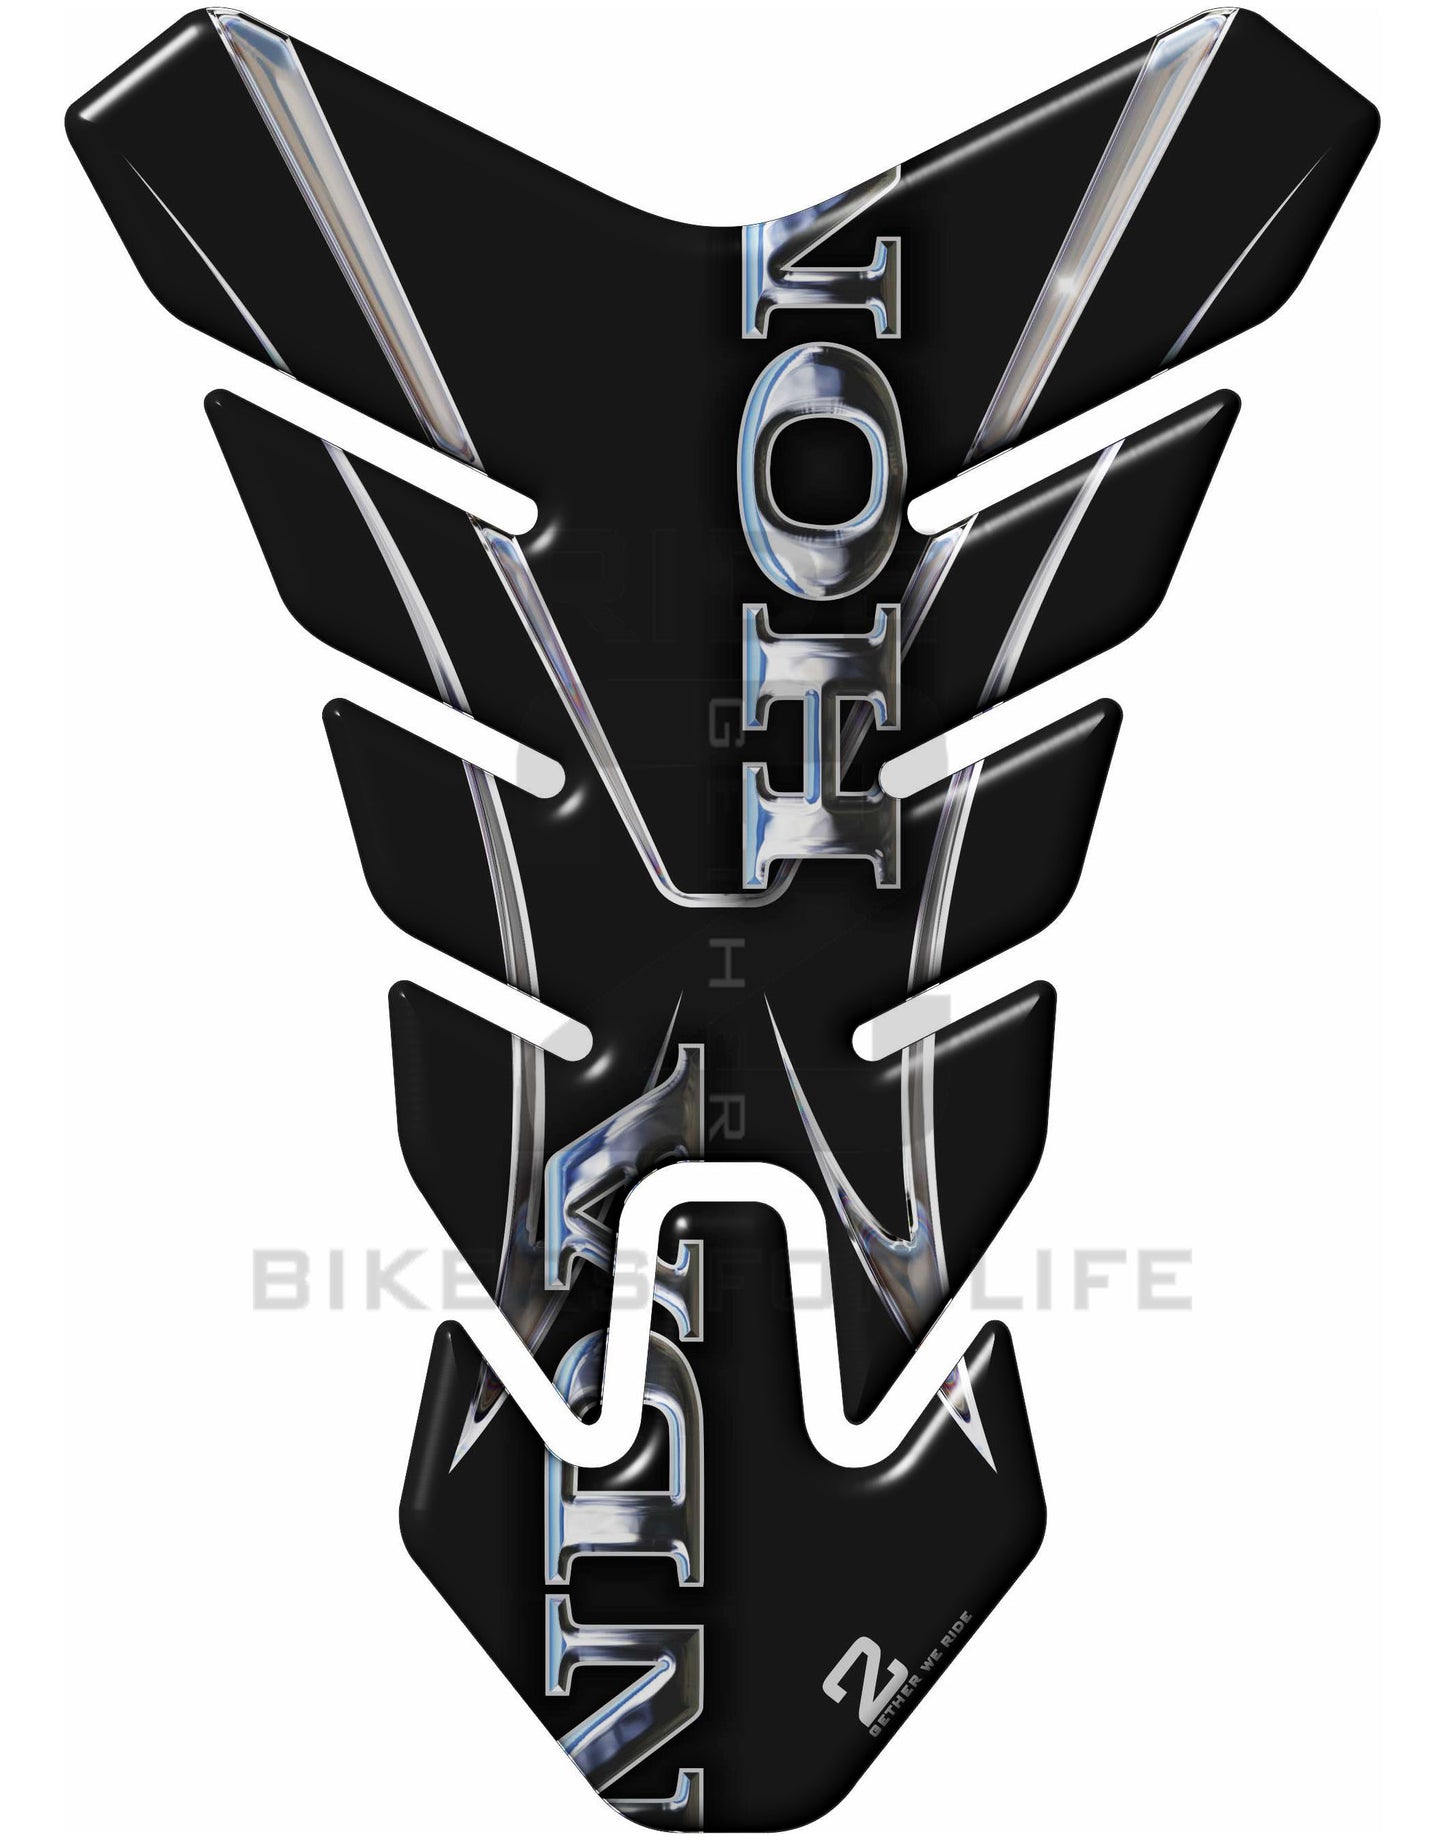 Motor Bike Tank Pad- Honda CBR, NC Series, CB Series, Twin Africa - Black Protective Tank Pad. Fits most Honda models.